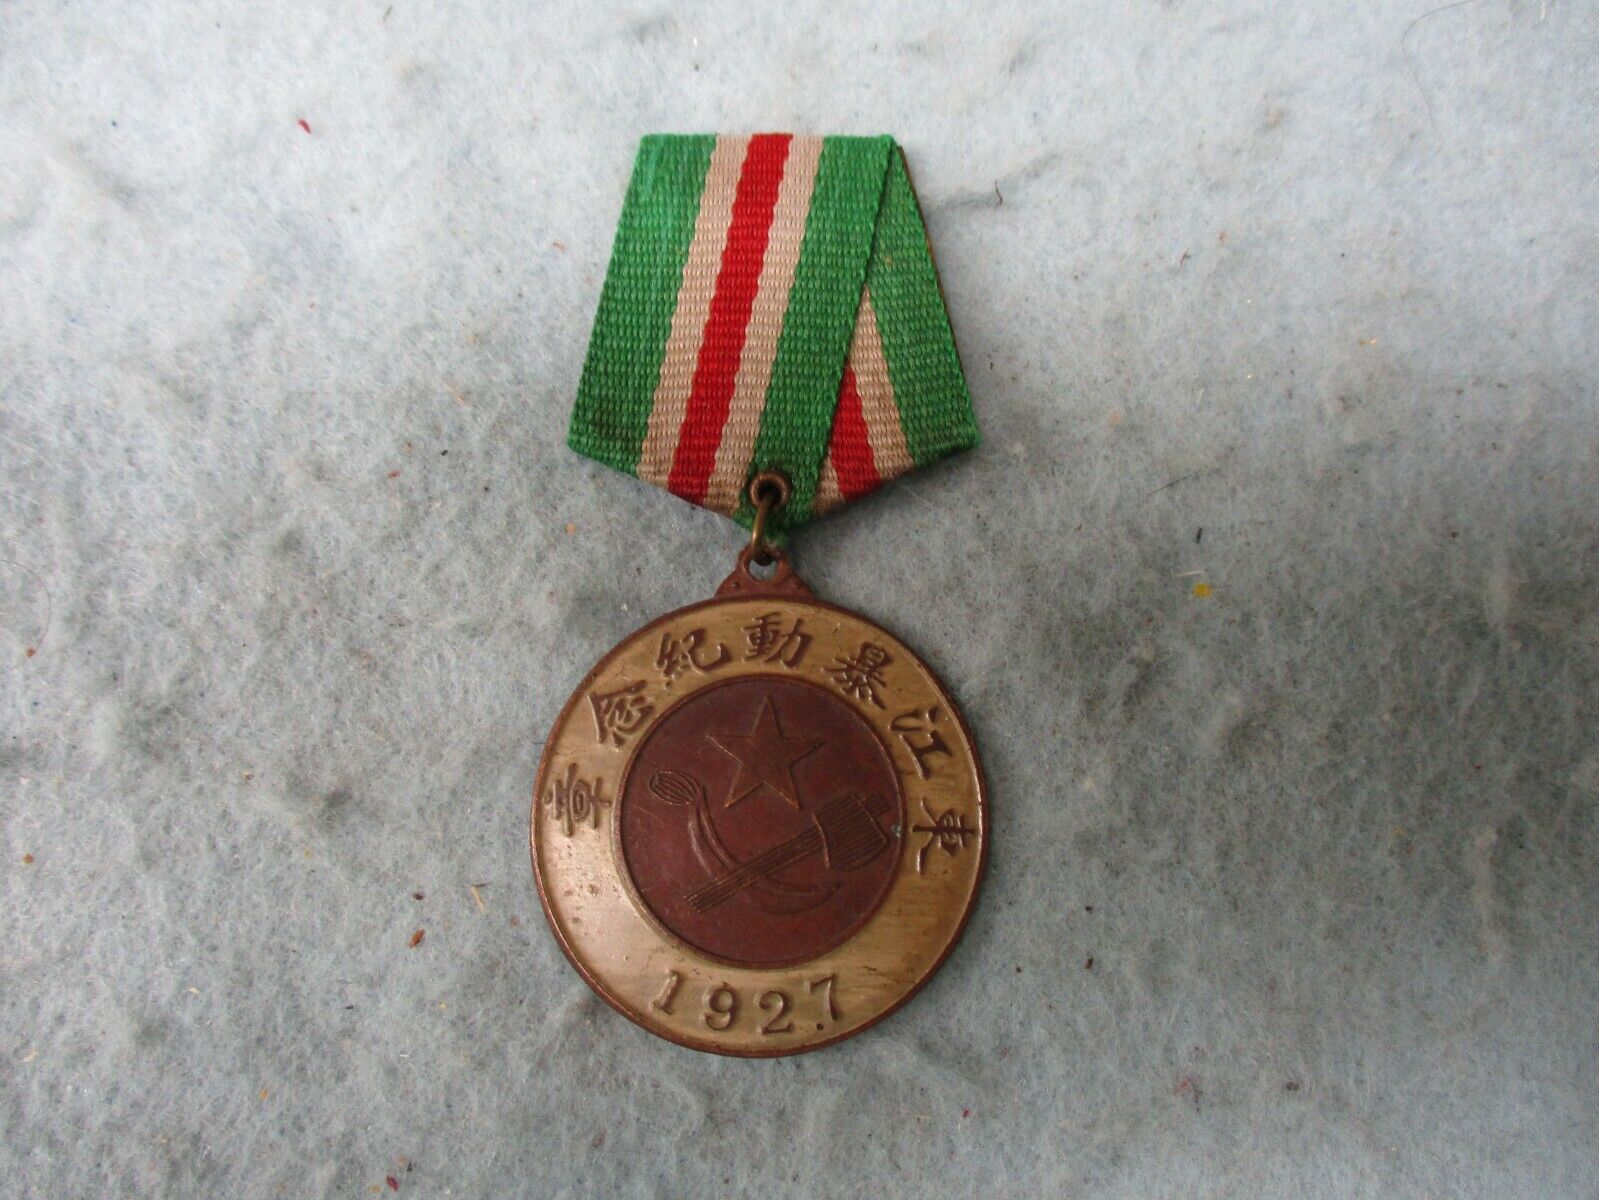 Chinese Communist Medal Hammer Sickle Star 1927 Pre WWII Between World Wars